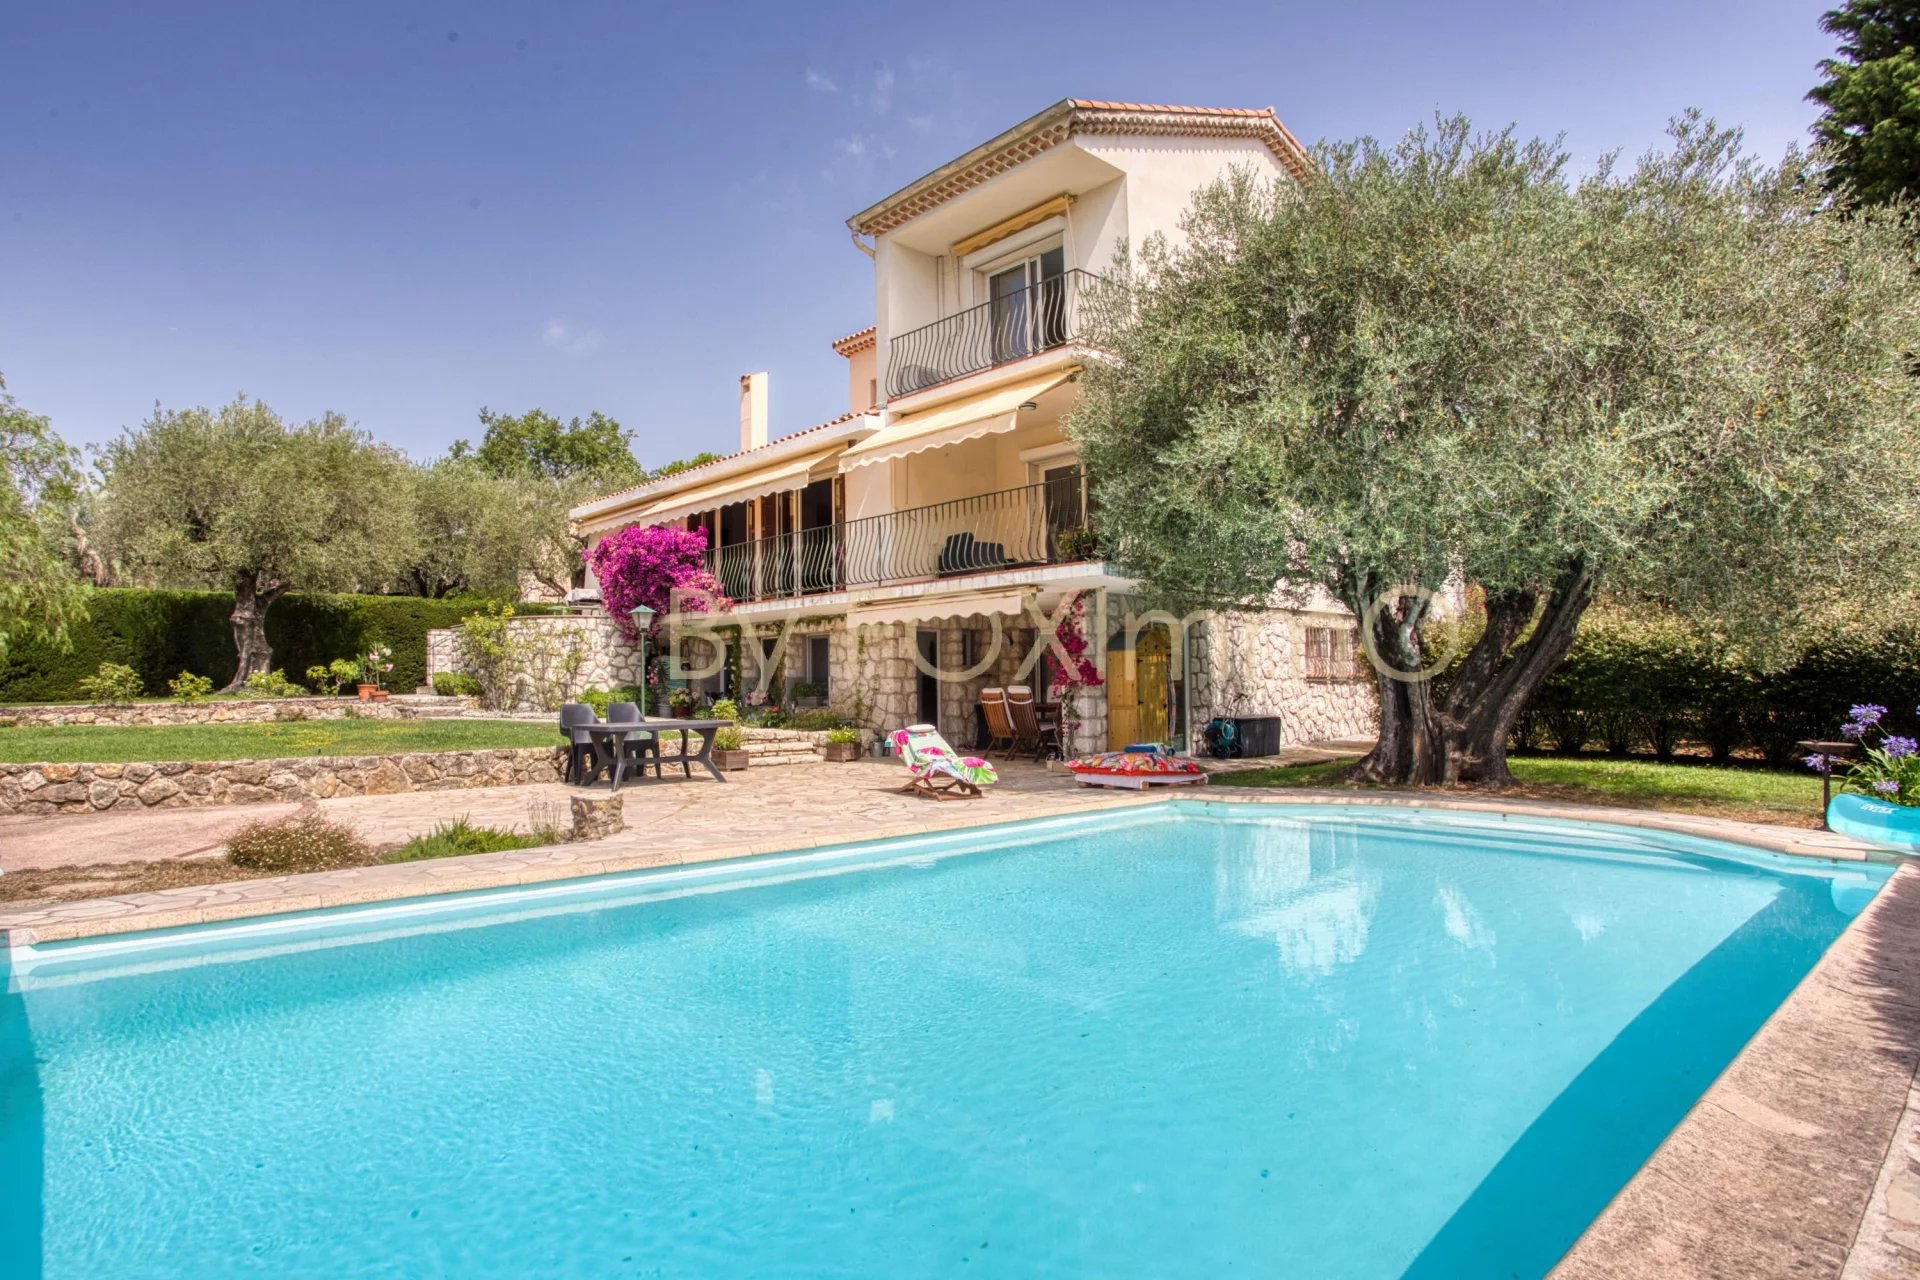 Côte d'Azur detached villa, quiet area, swimming pool, Separate apartment